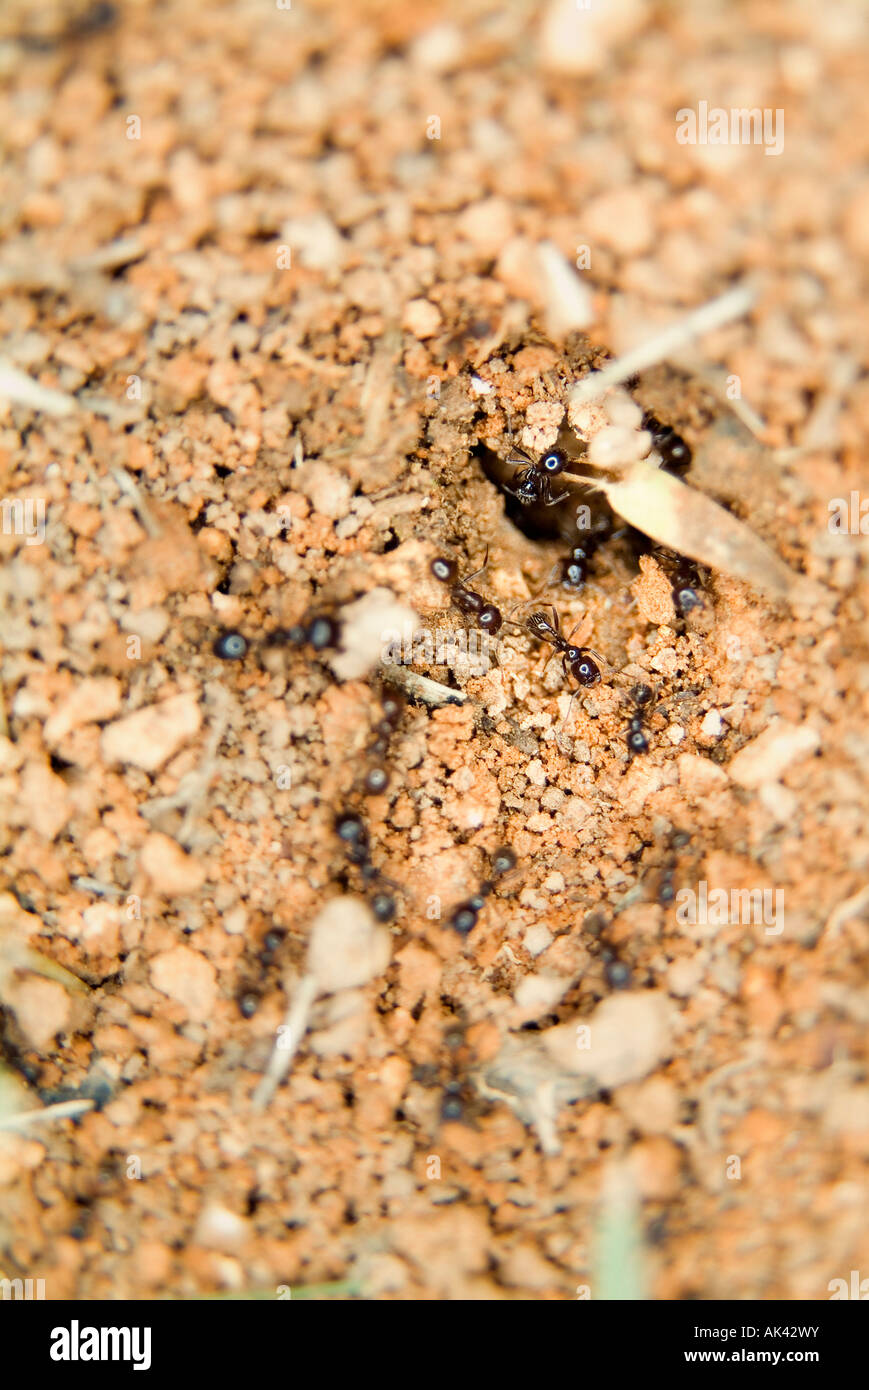 Ants Colony close-up Stock Photo